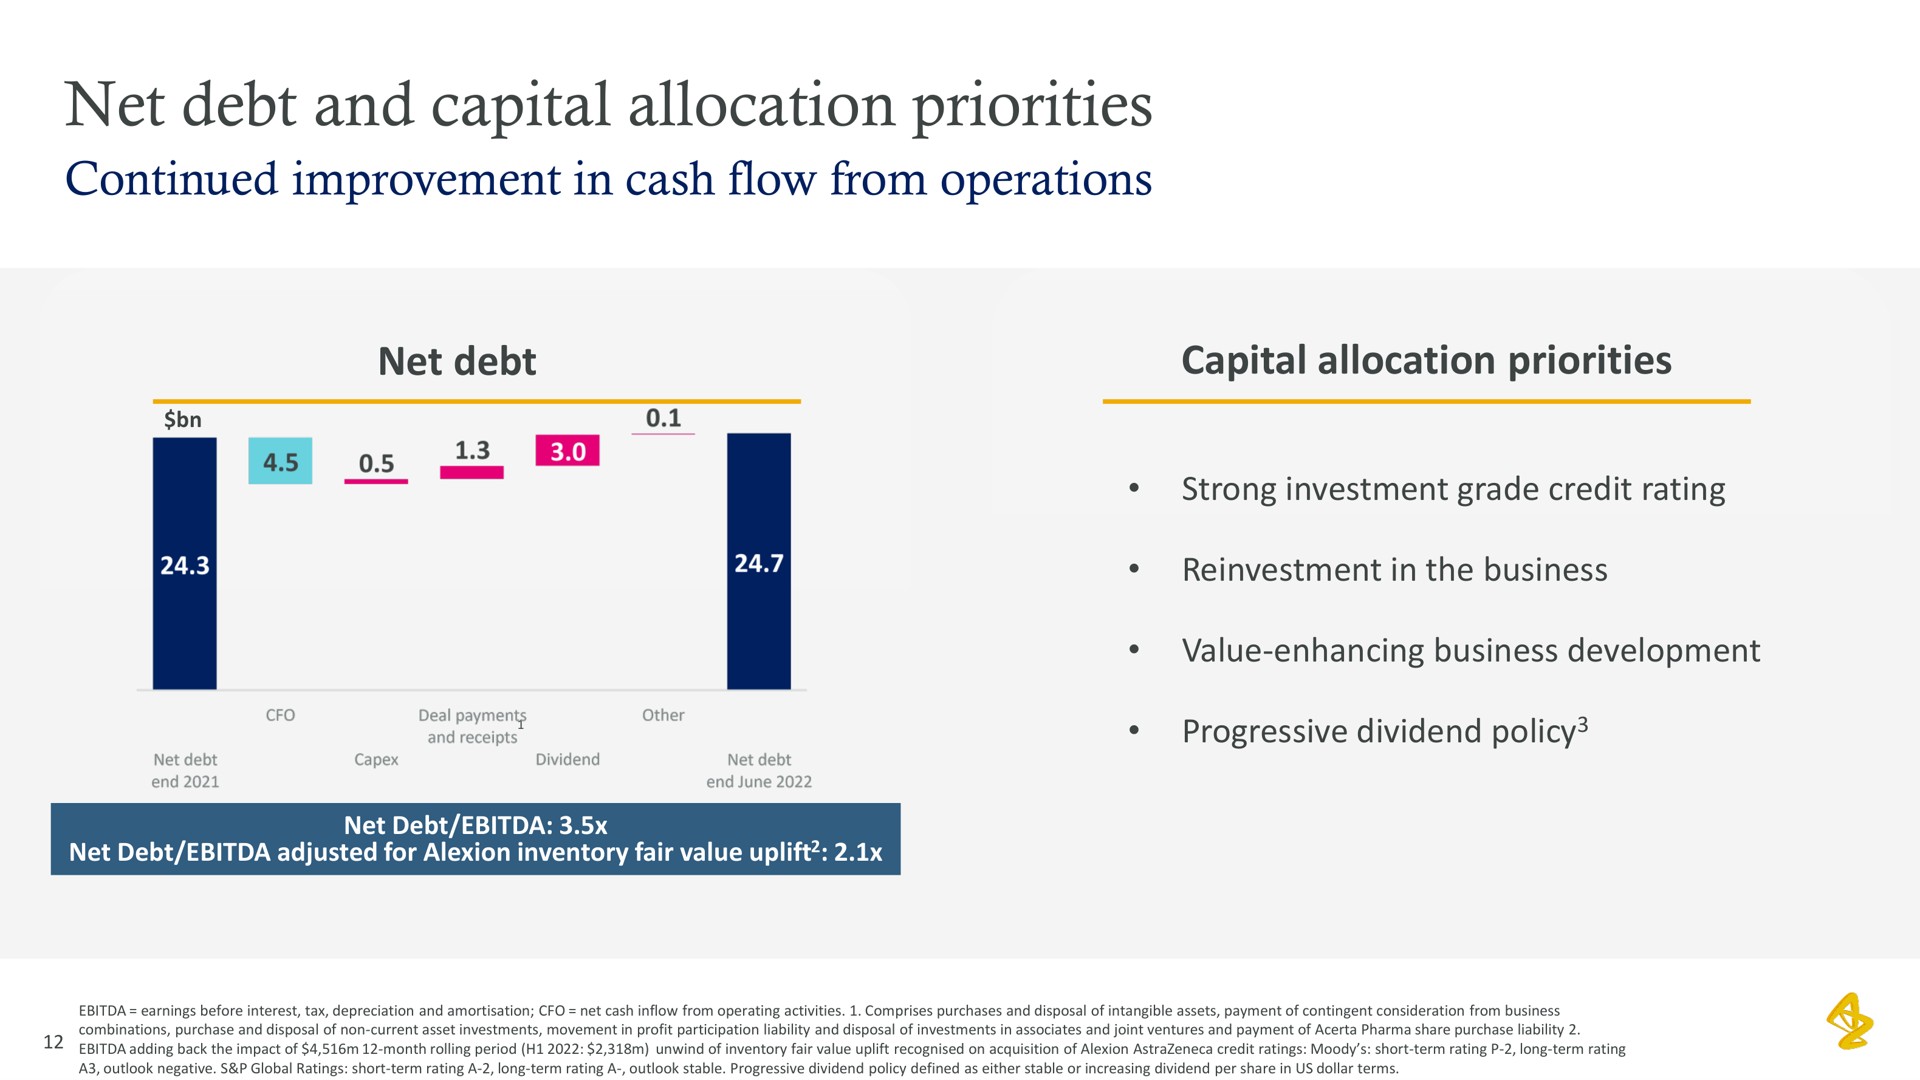 net debt and capital allocation priorities | AstraZeneca